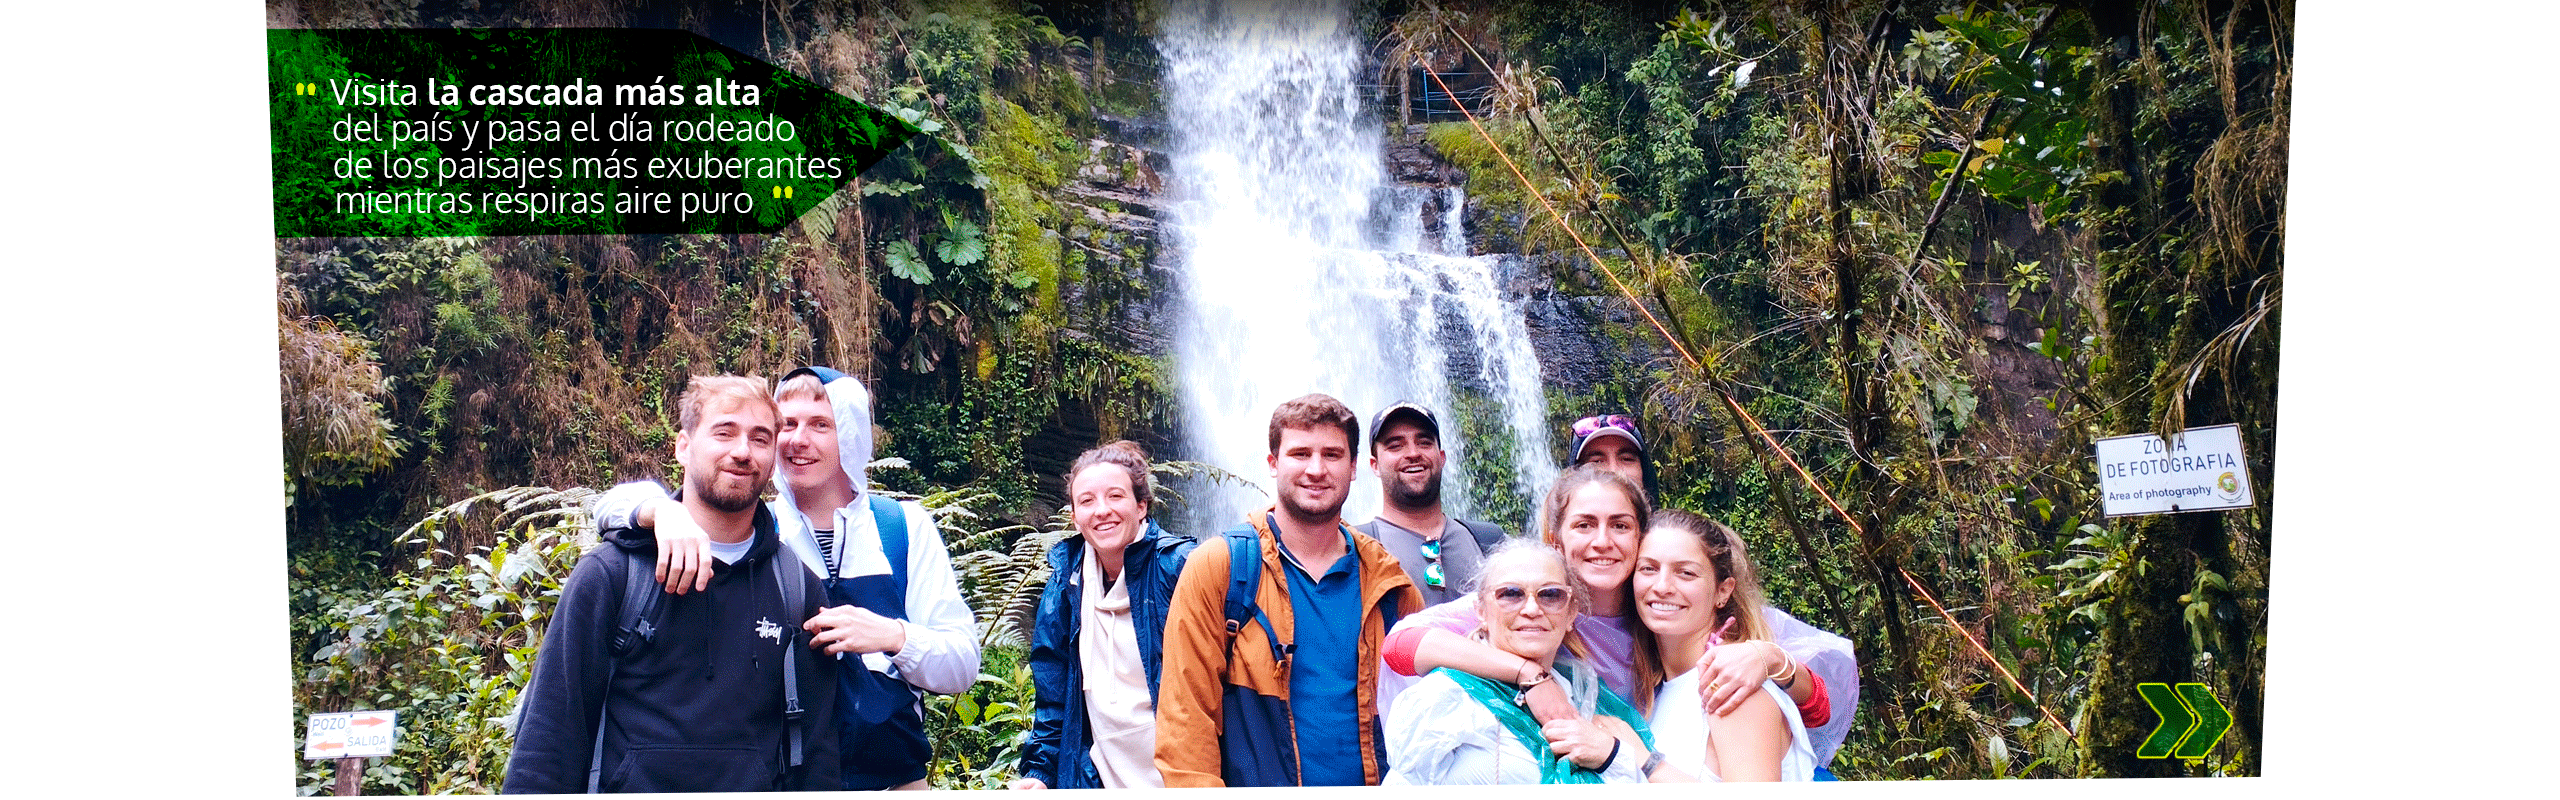 Beyond Colombia Tours | Tour: Caminata Tour a Cascada La Chorrera